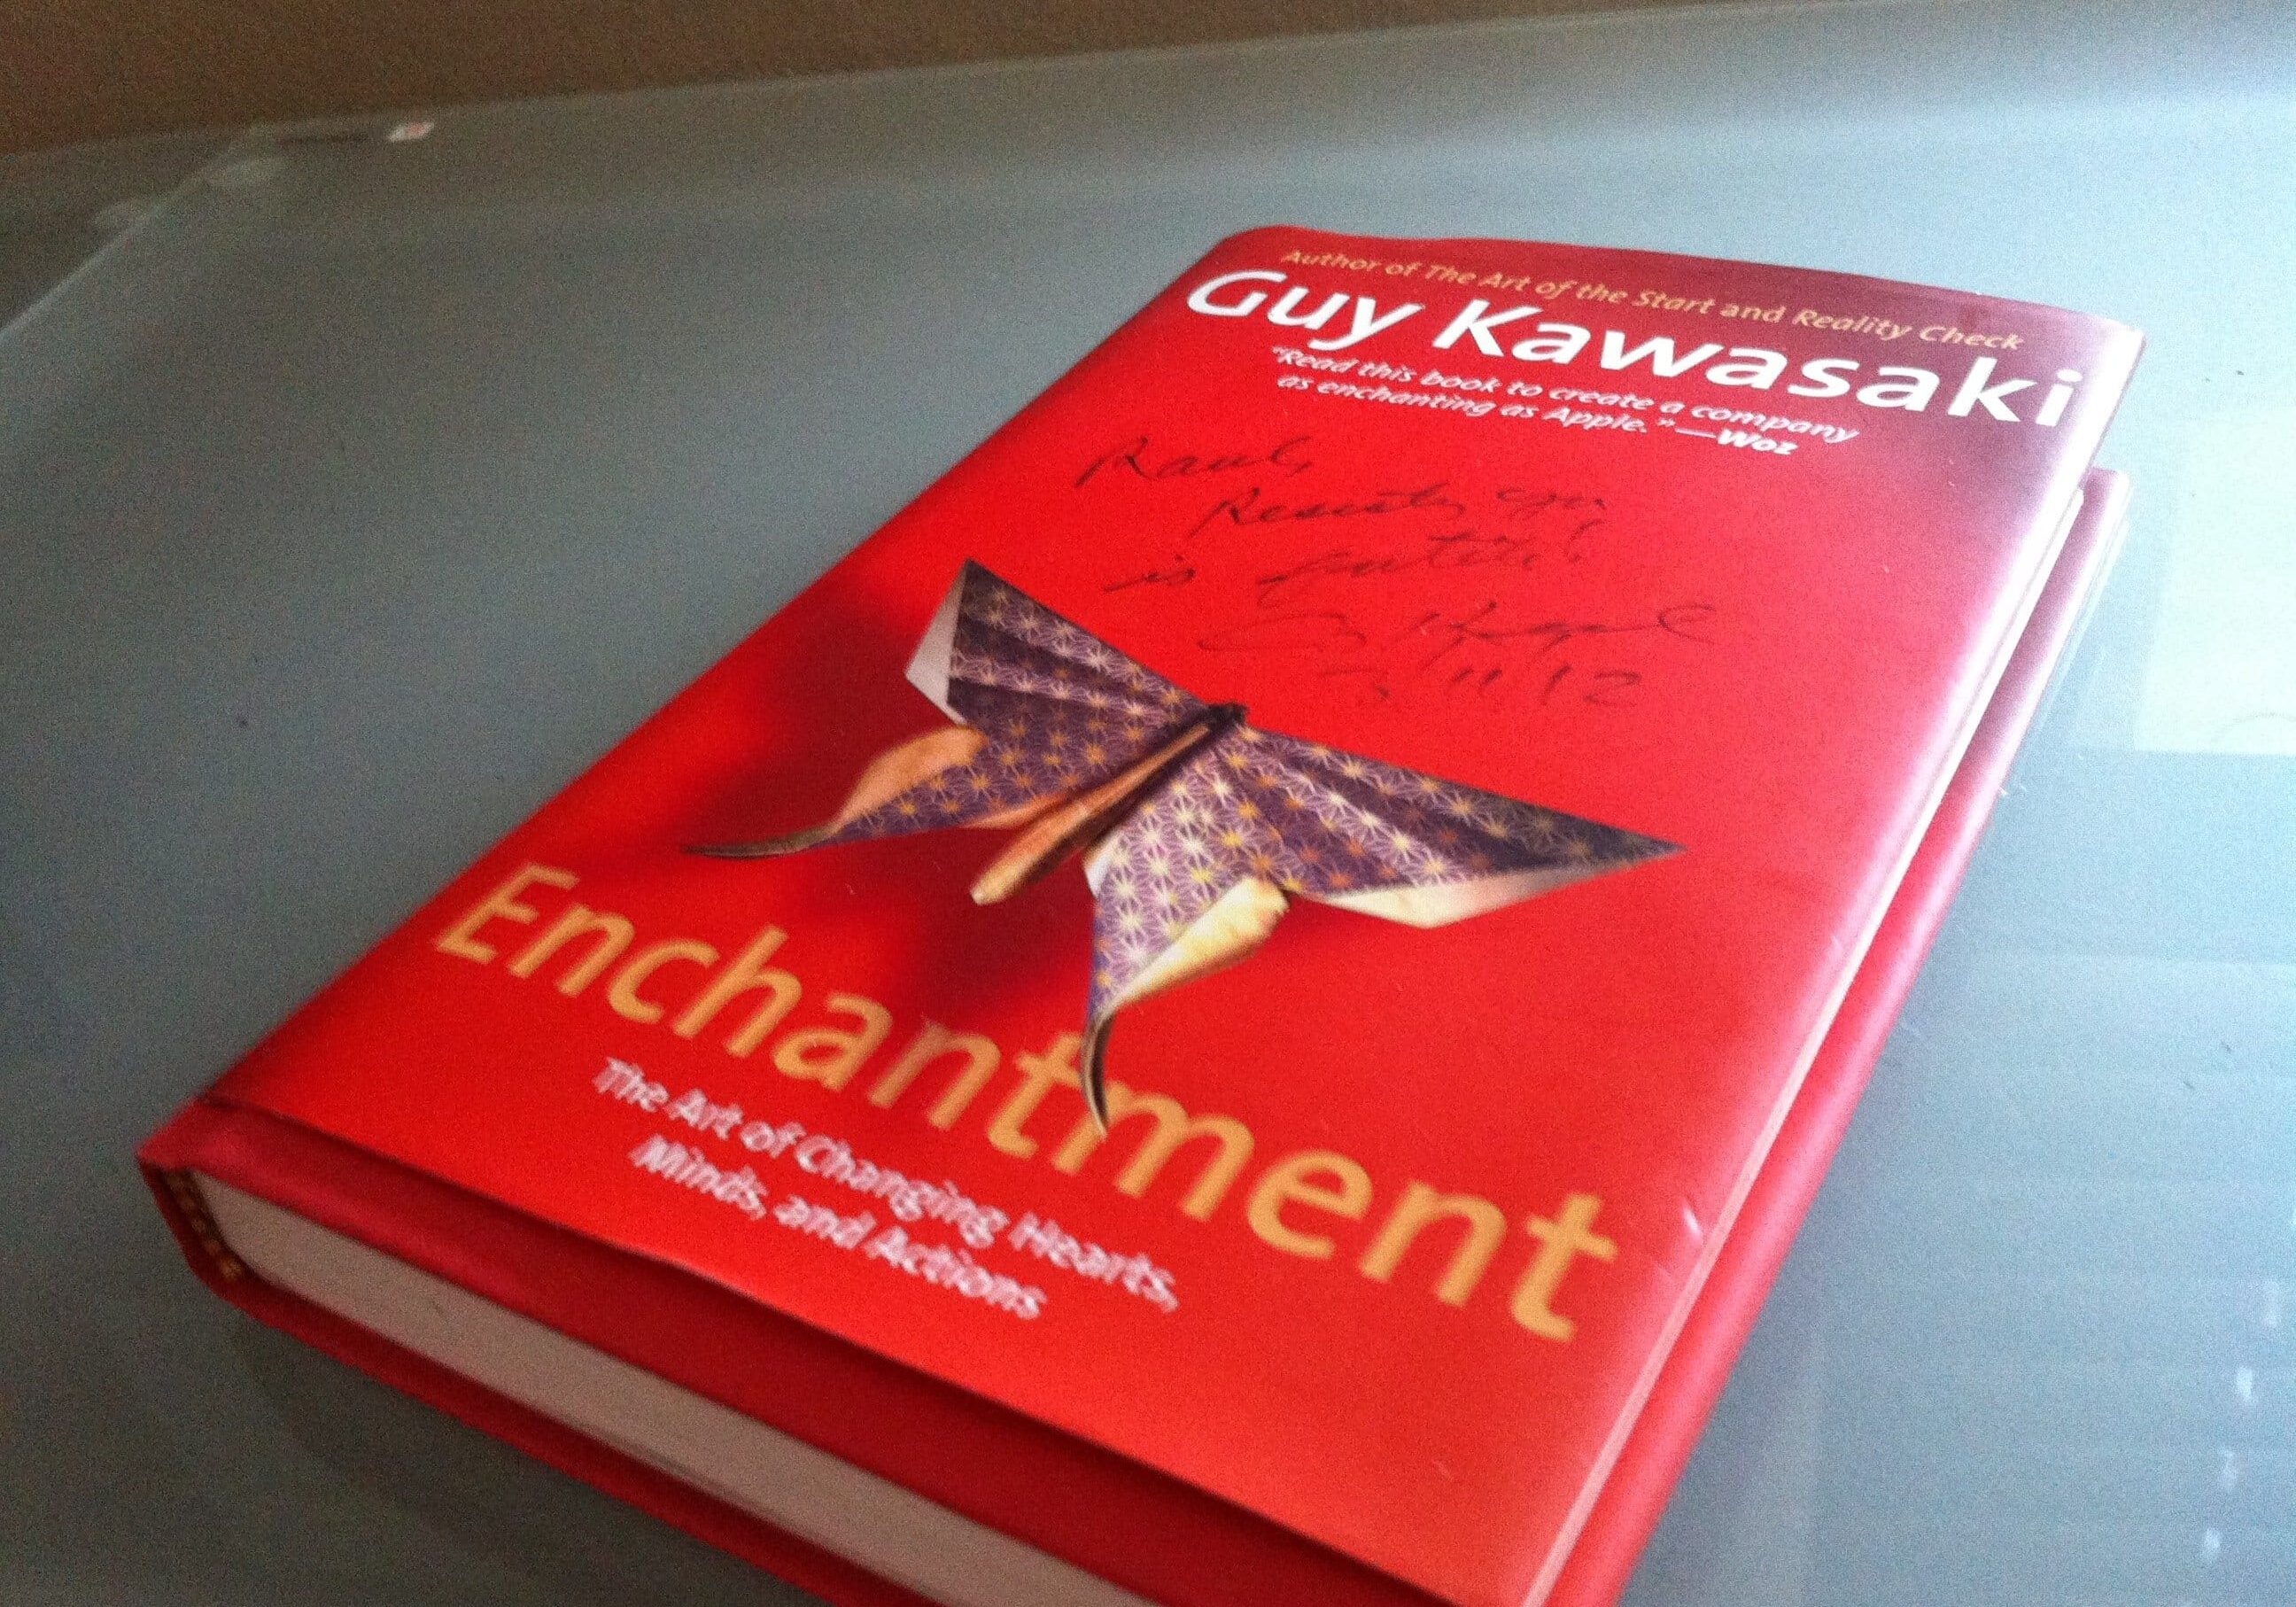 Enchantment  Book Review Guy Kayawasaki